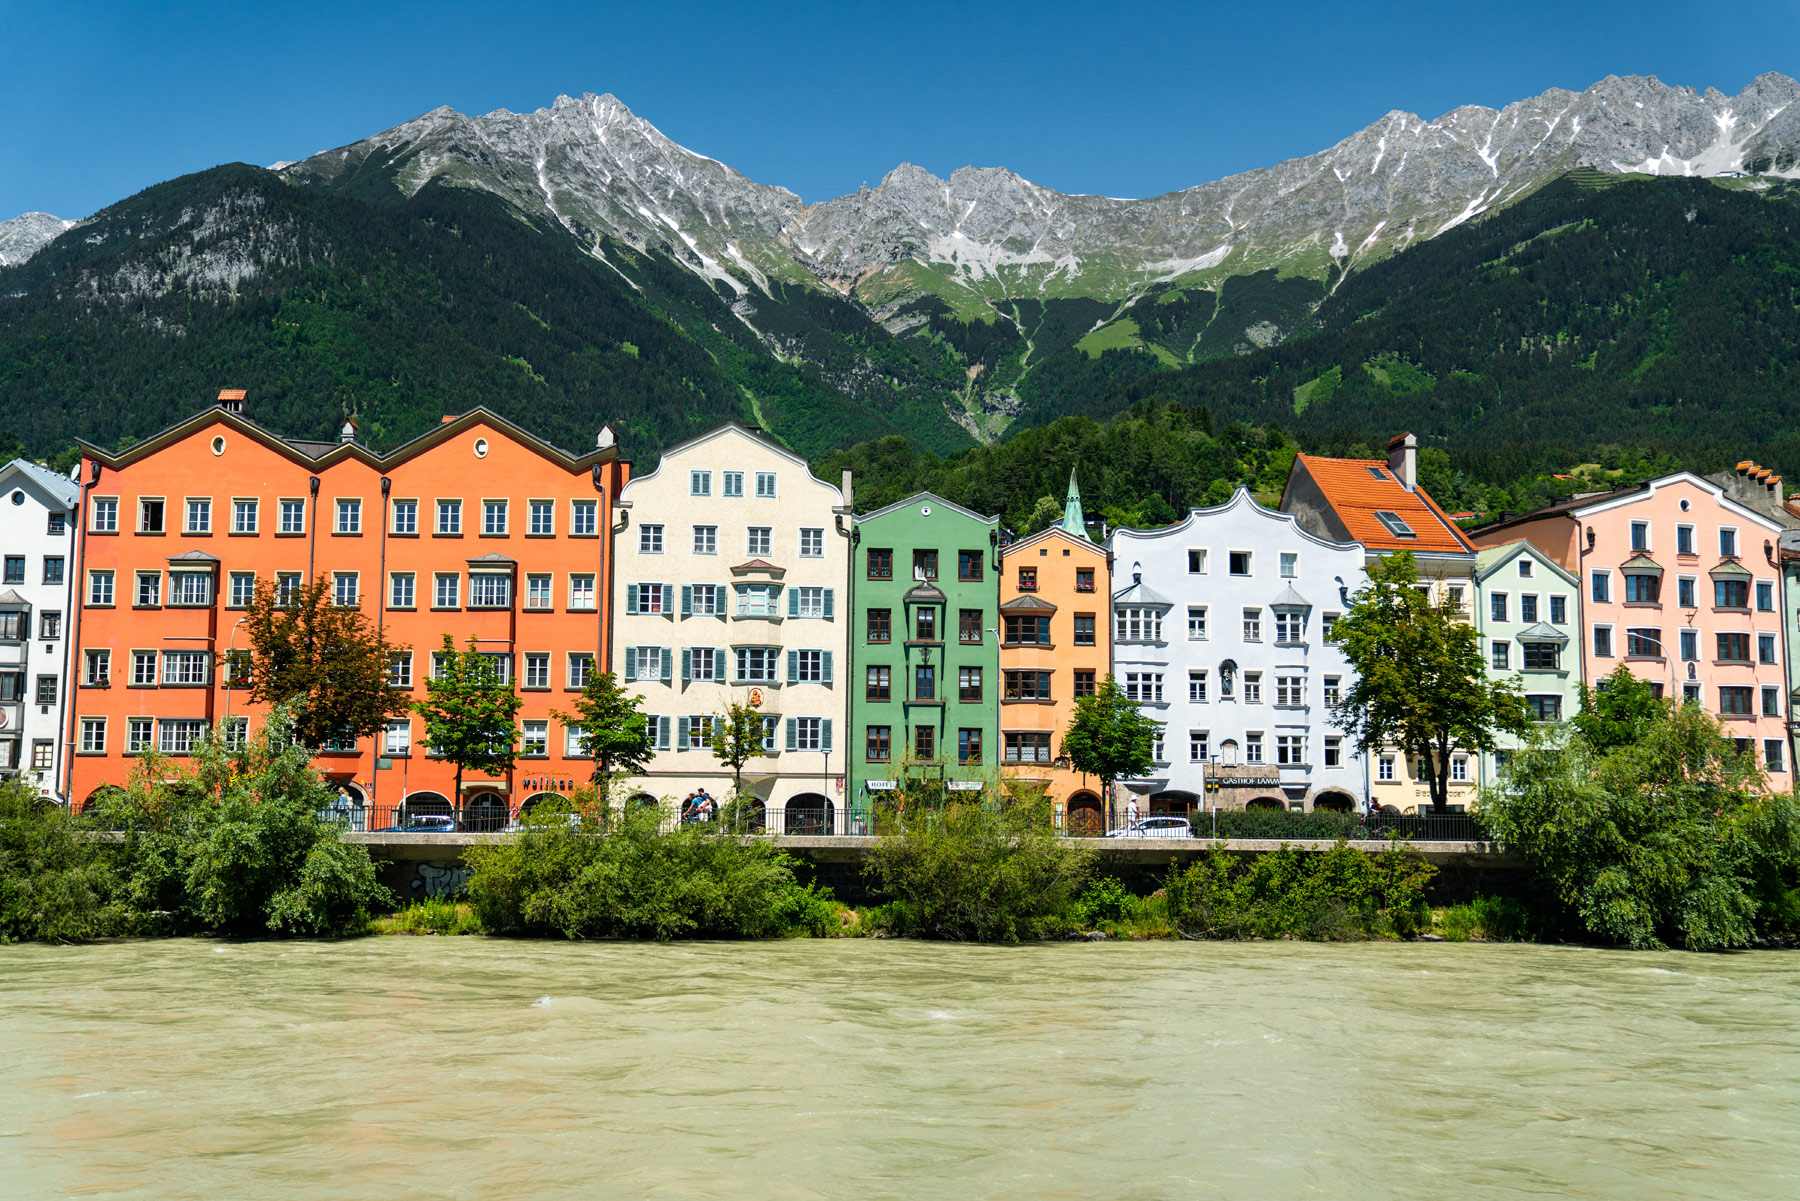 View of Innsbruck. Photo by Lucas Duernegger